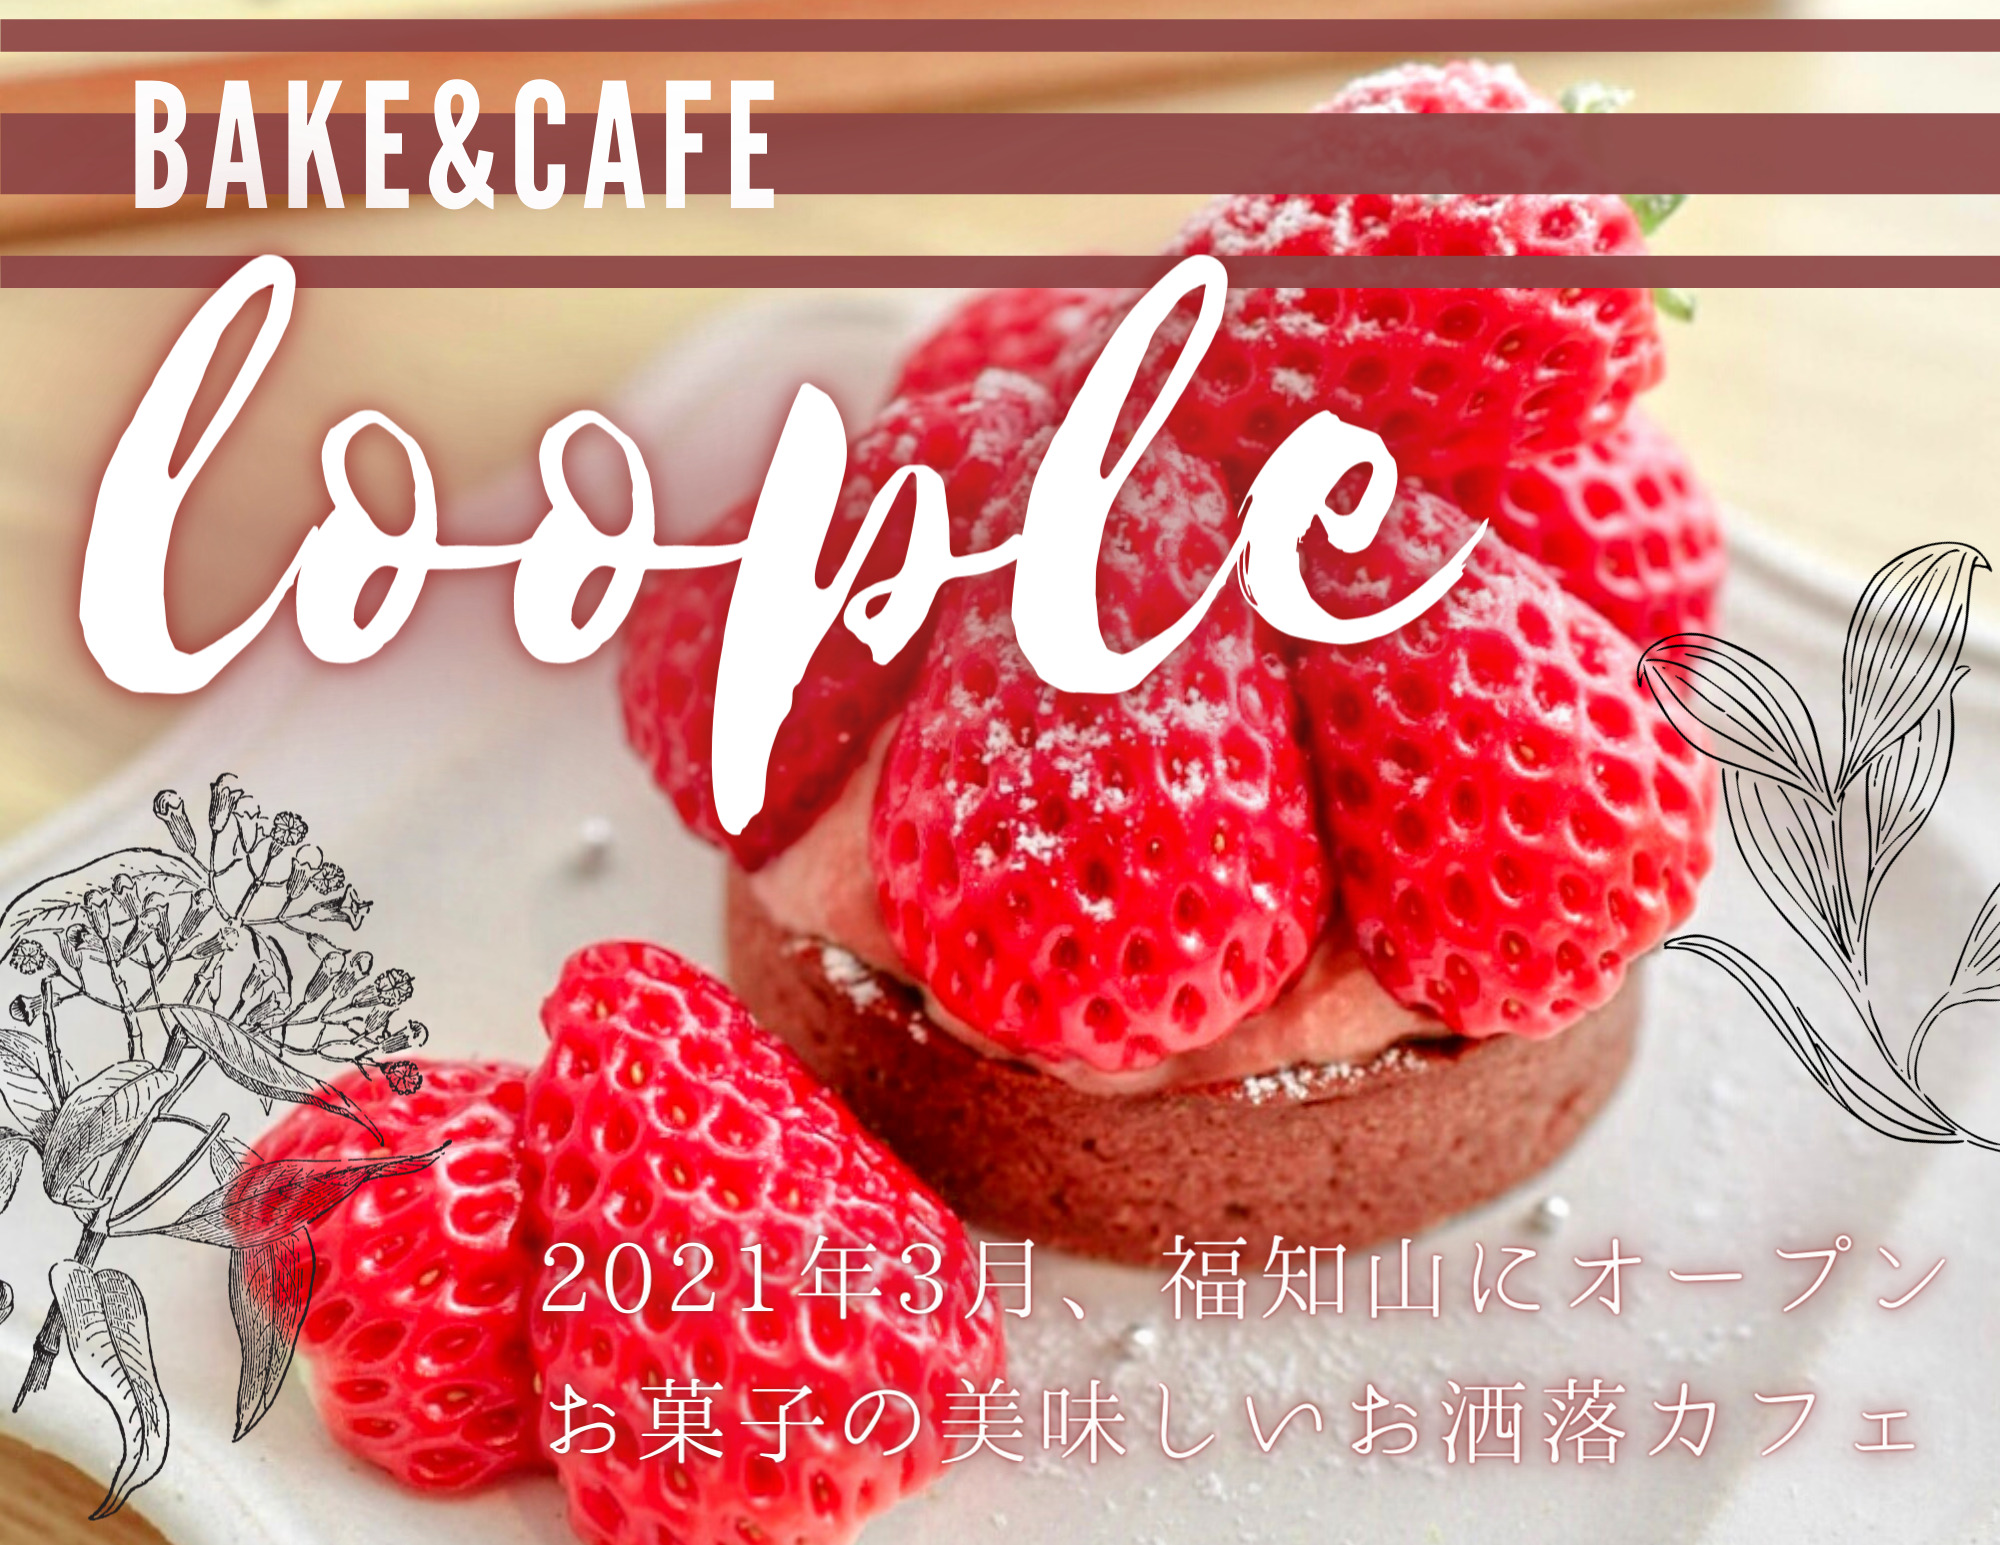 Bake Cafe Loople ループル 21年3月新オープン 可愛くてお洒落なカフェはオープン前から話題のお店 福知山市 奥京都ぱんだ